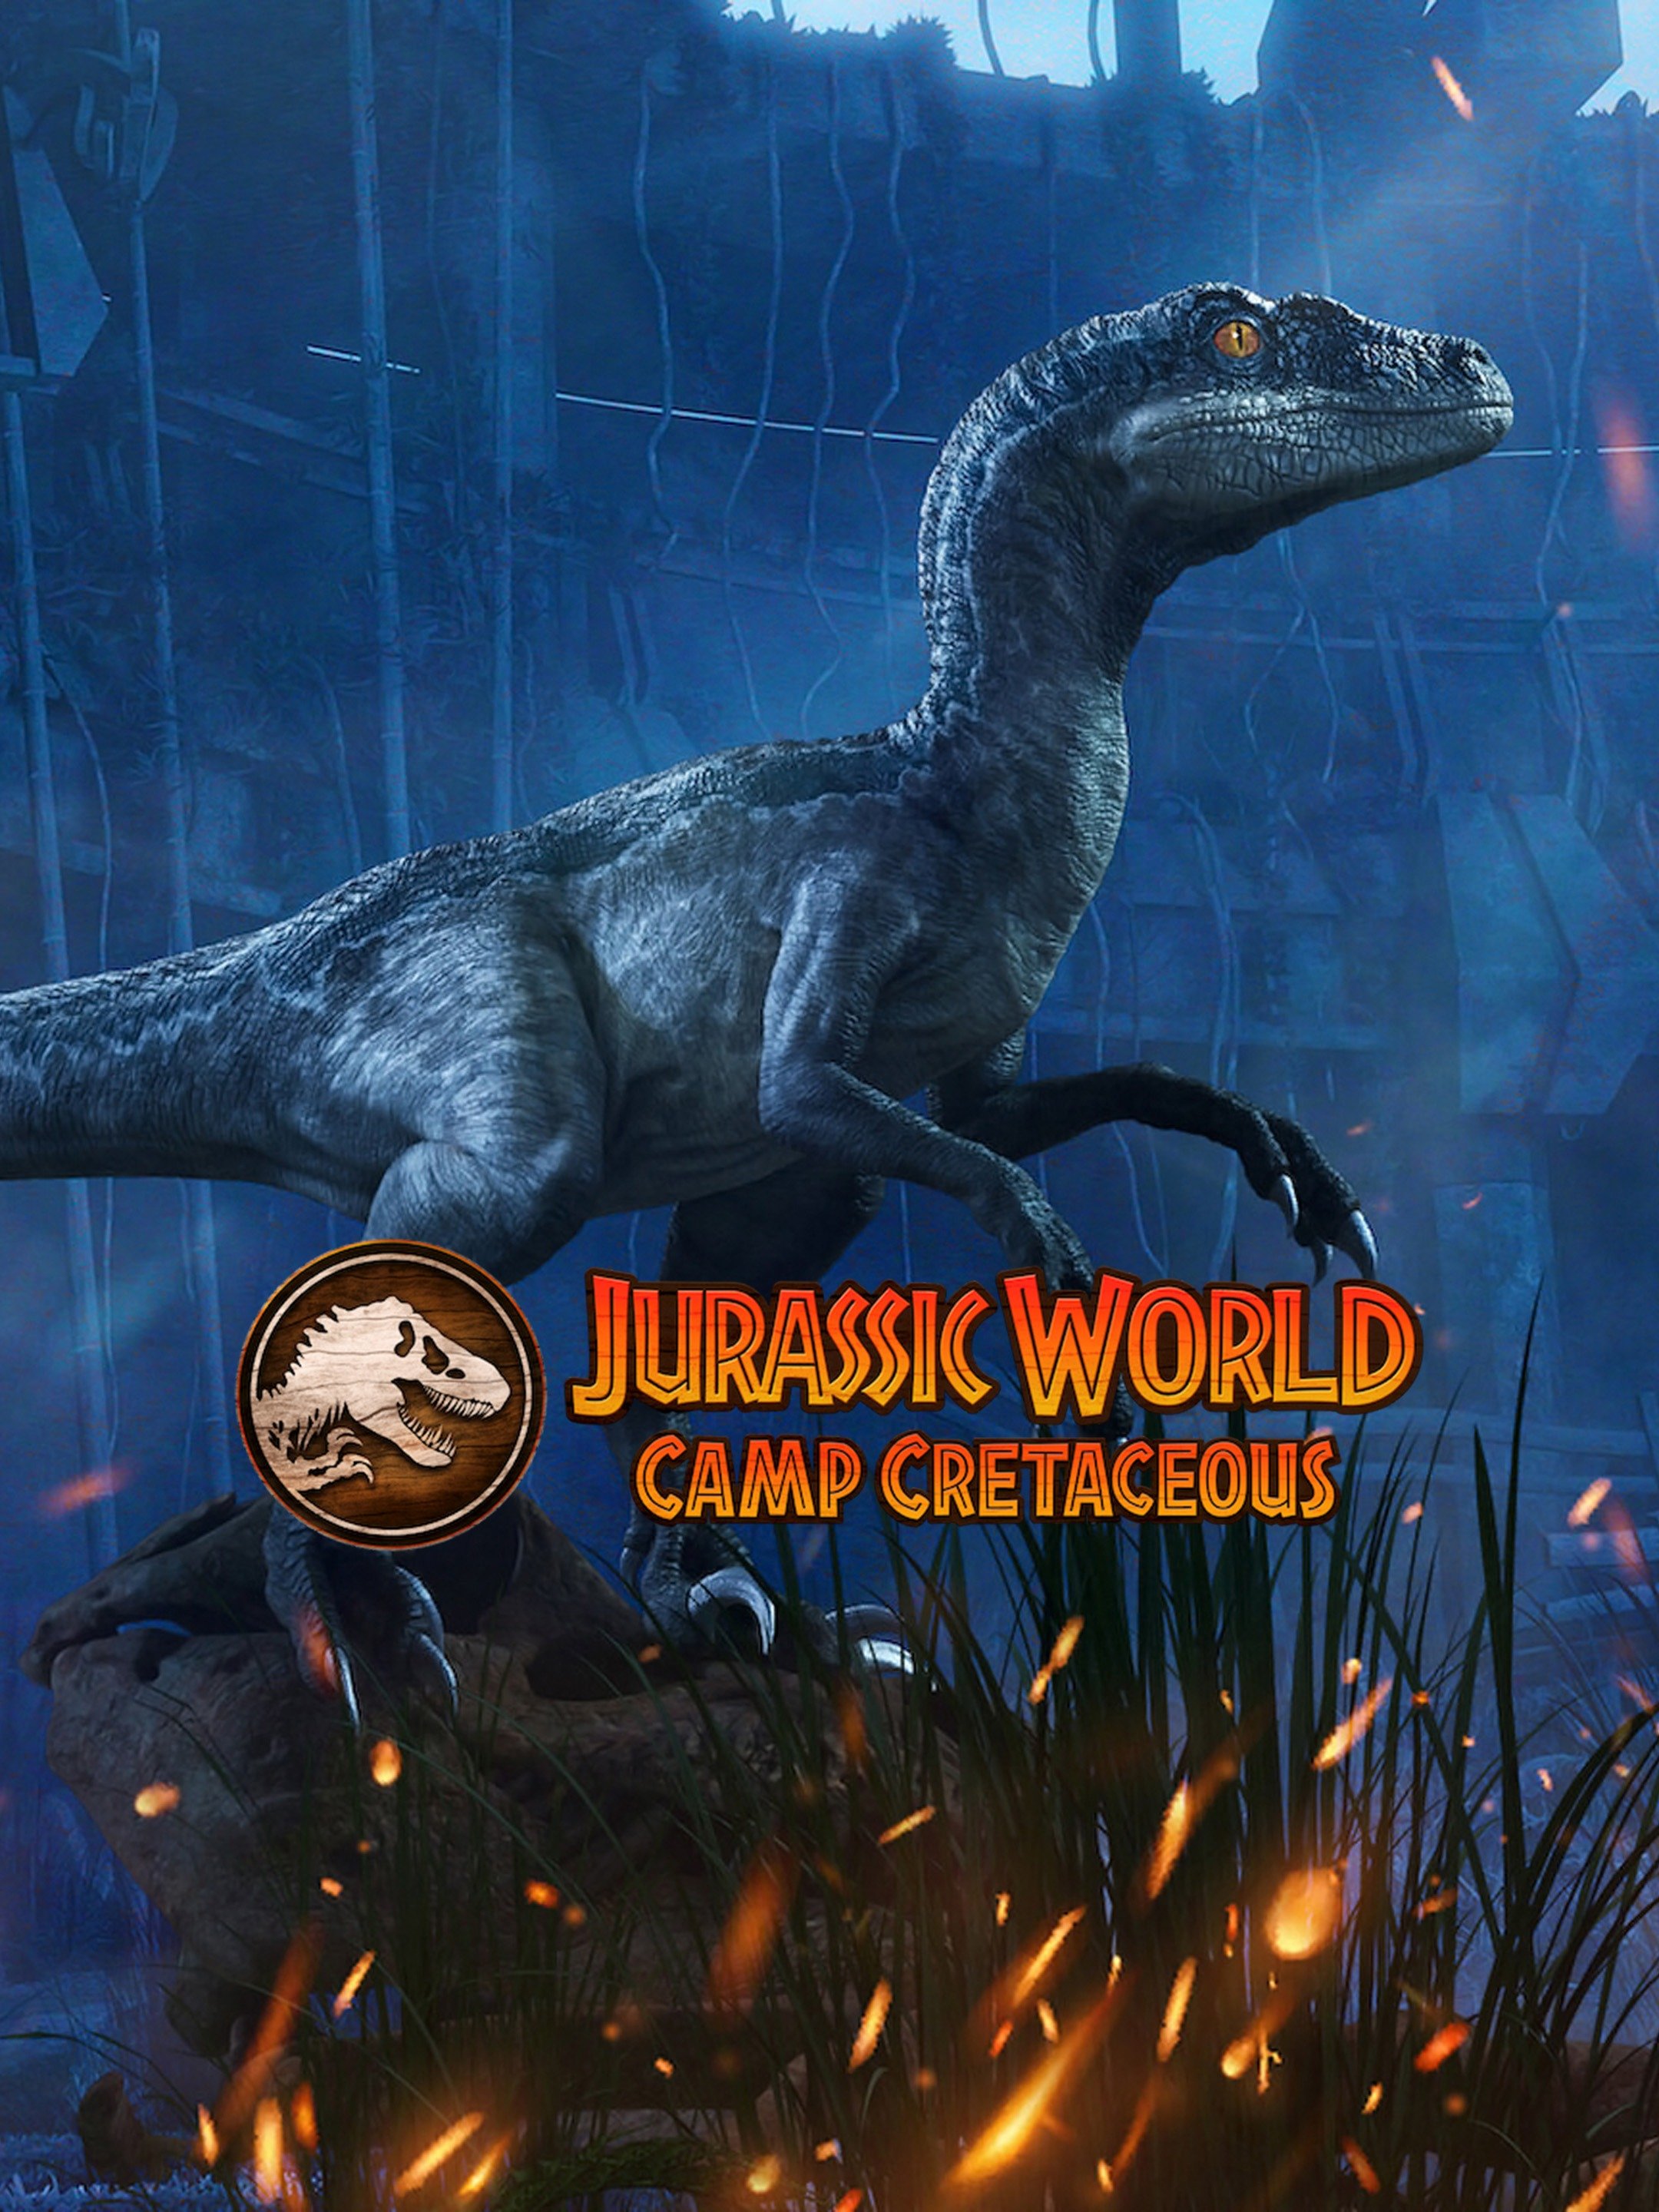 Jurassic world camp cretaceous season 3